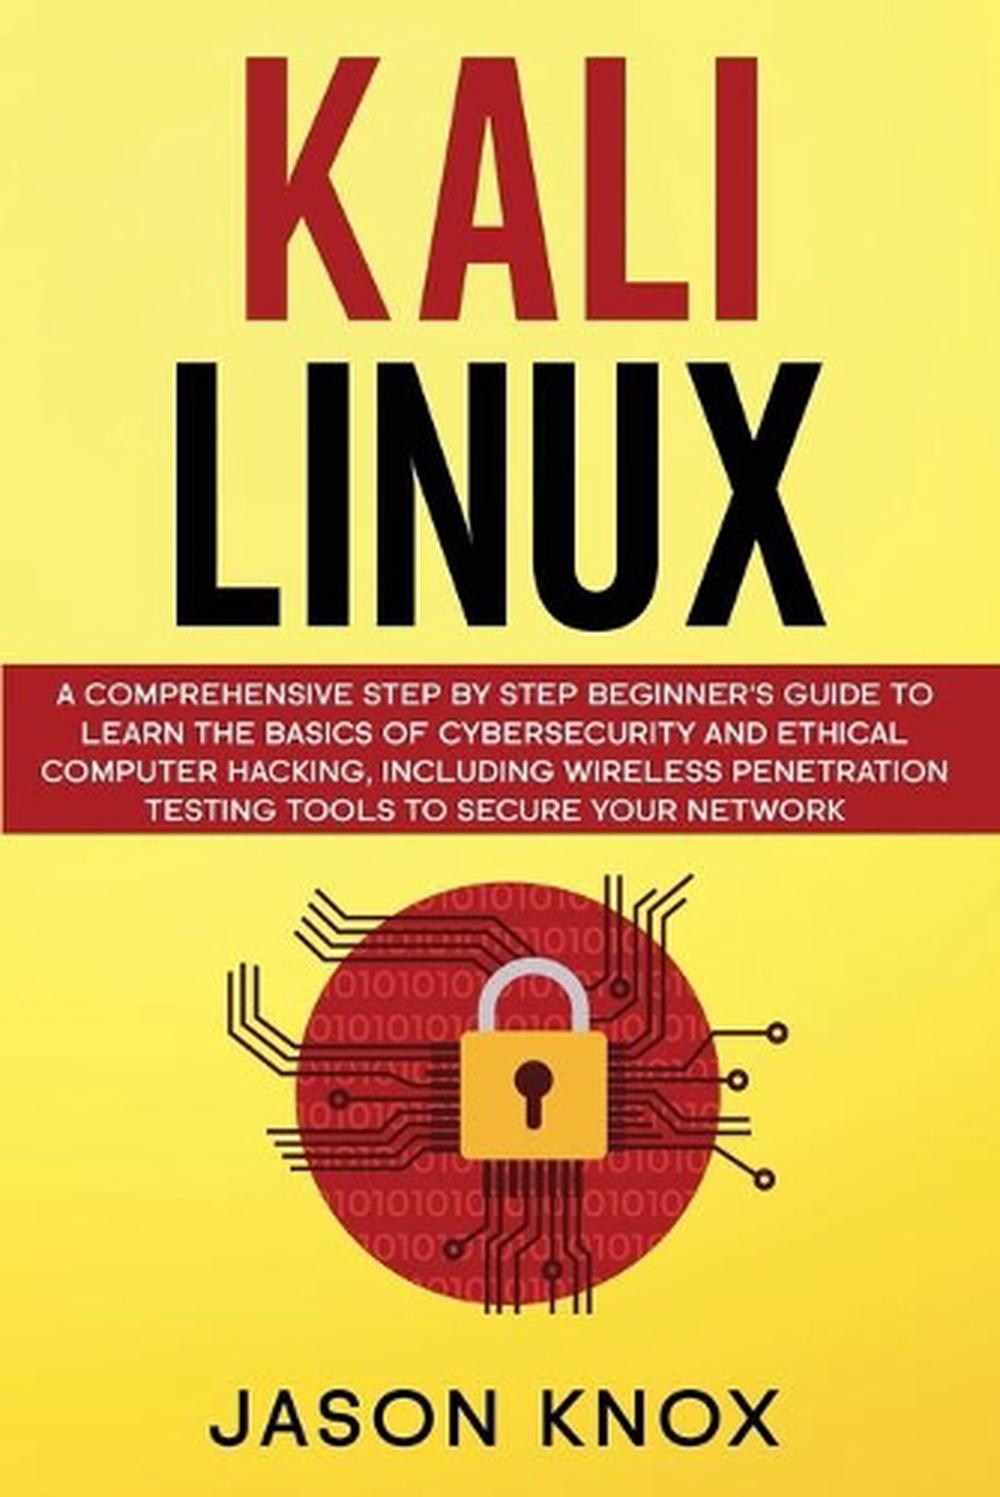 kali linux book